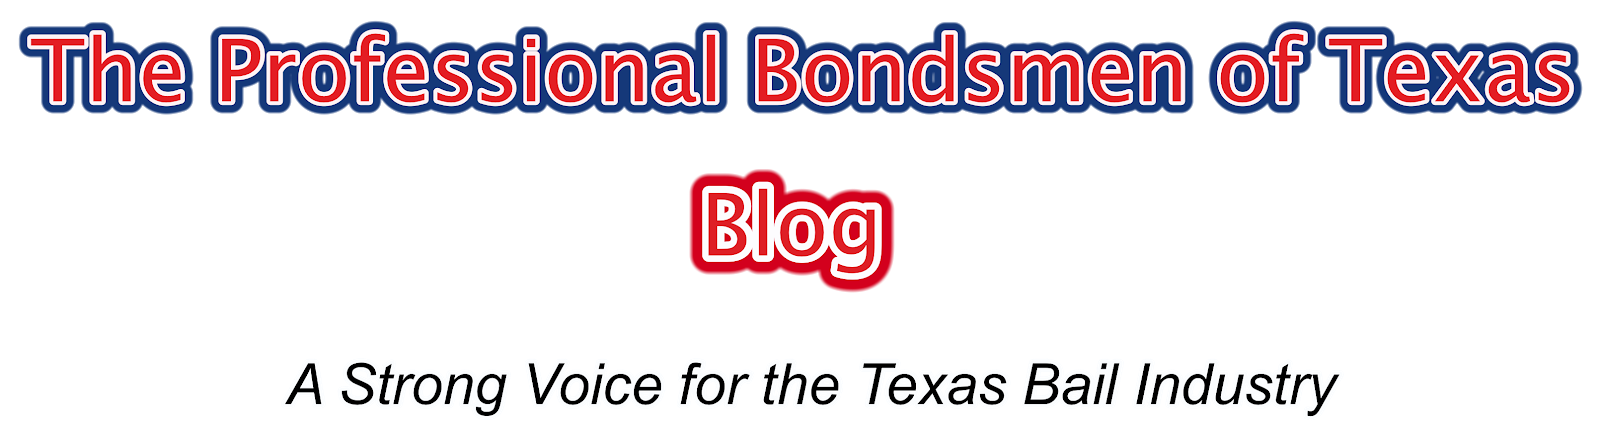 The Professional Bondsmen of Texas- Blog